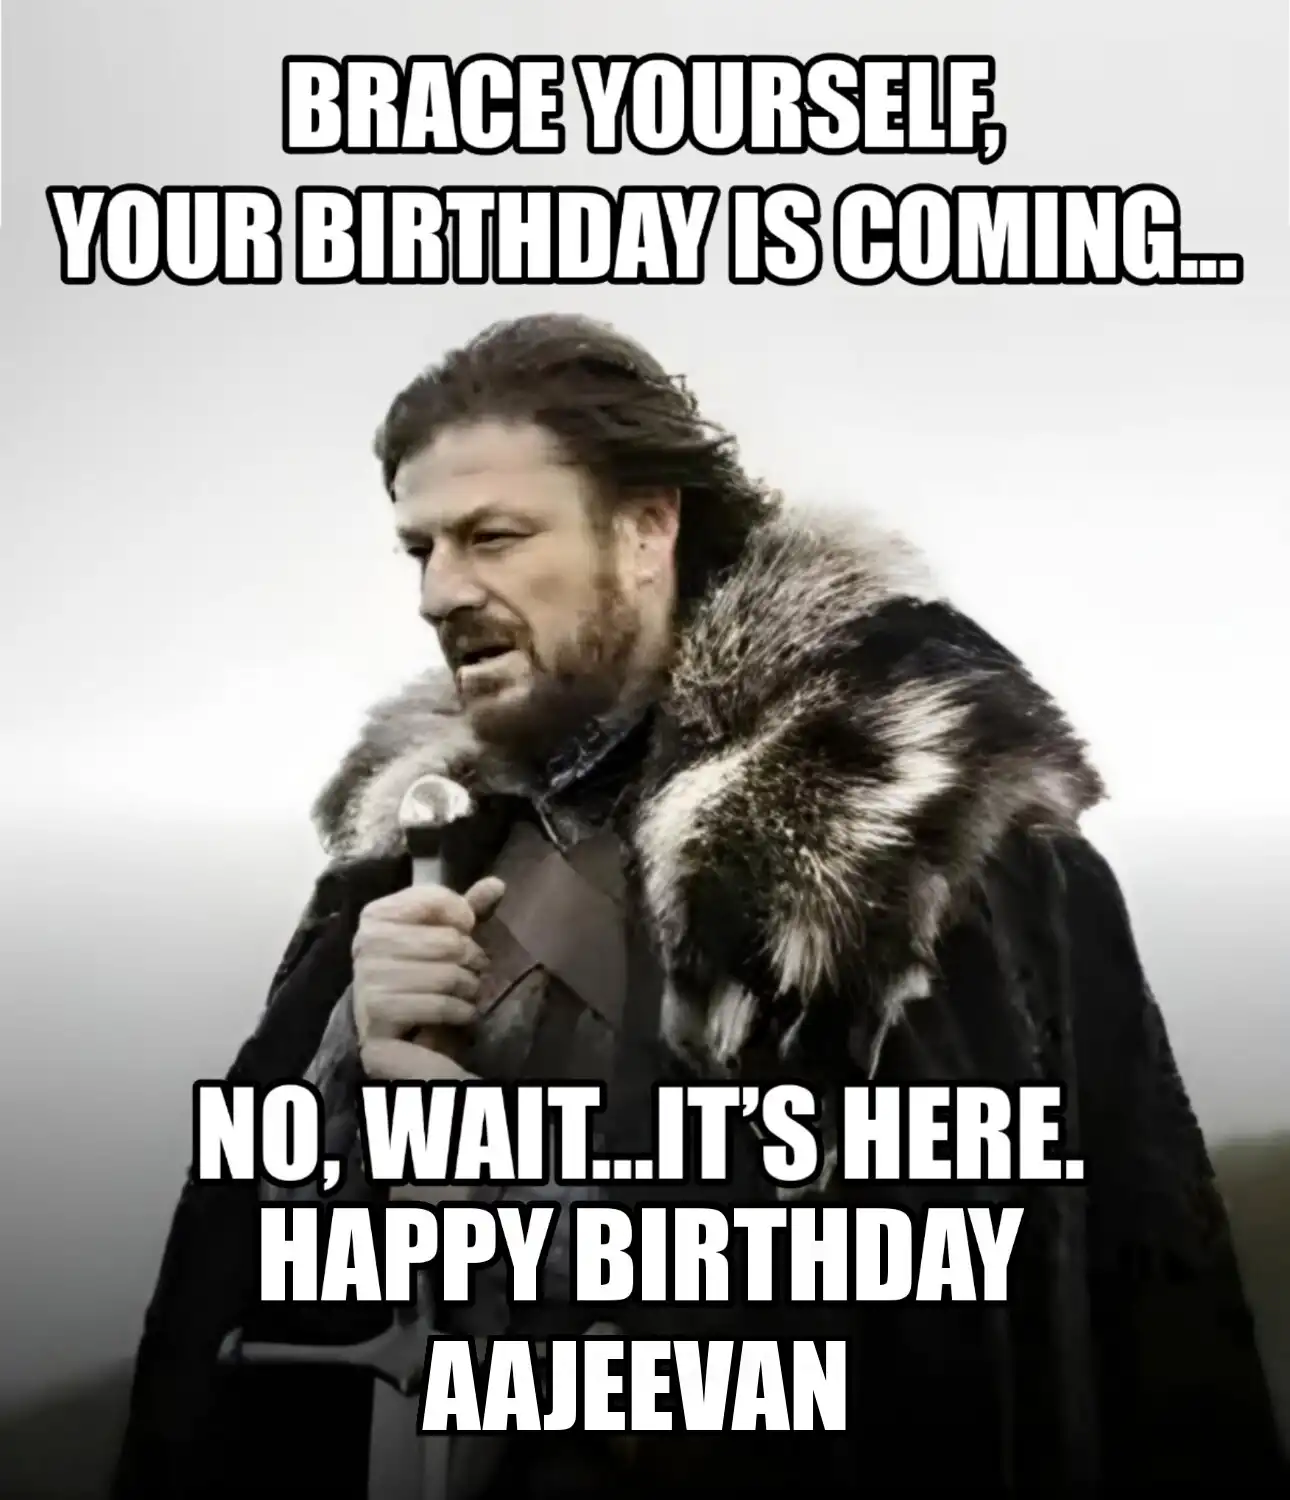 Happy Birthday Aajeevan Brace Yourself Your Birthday Is Coming Meme